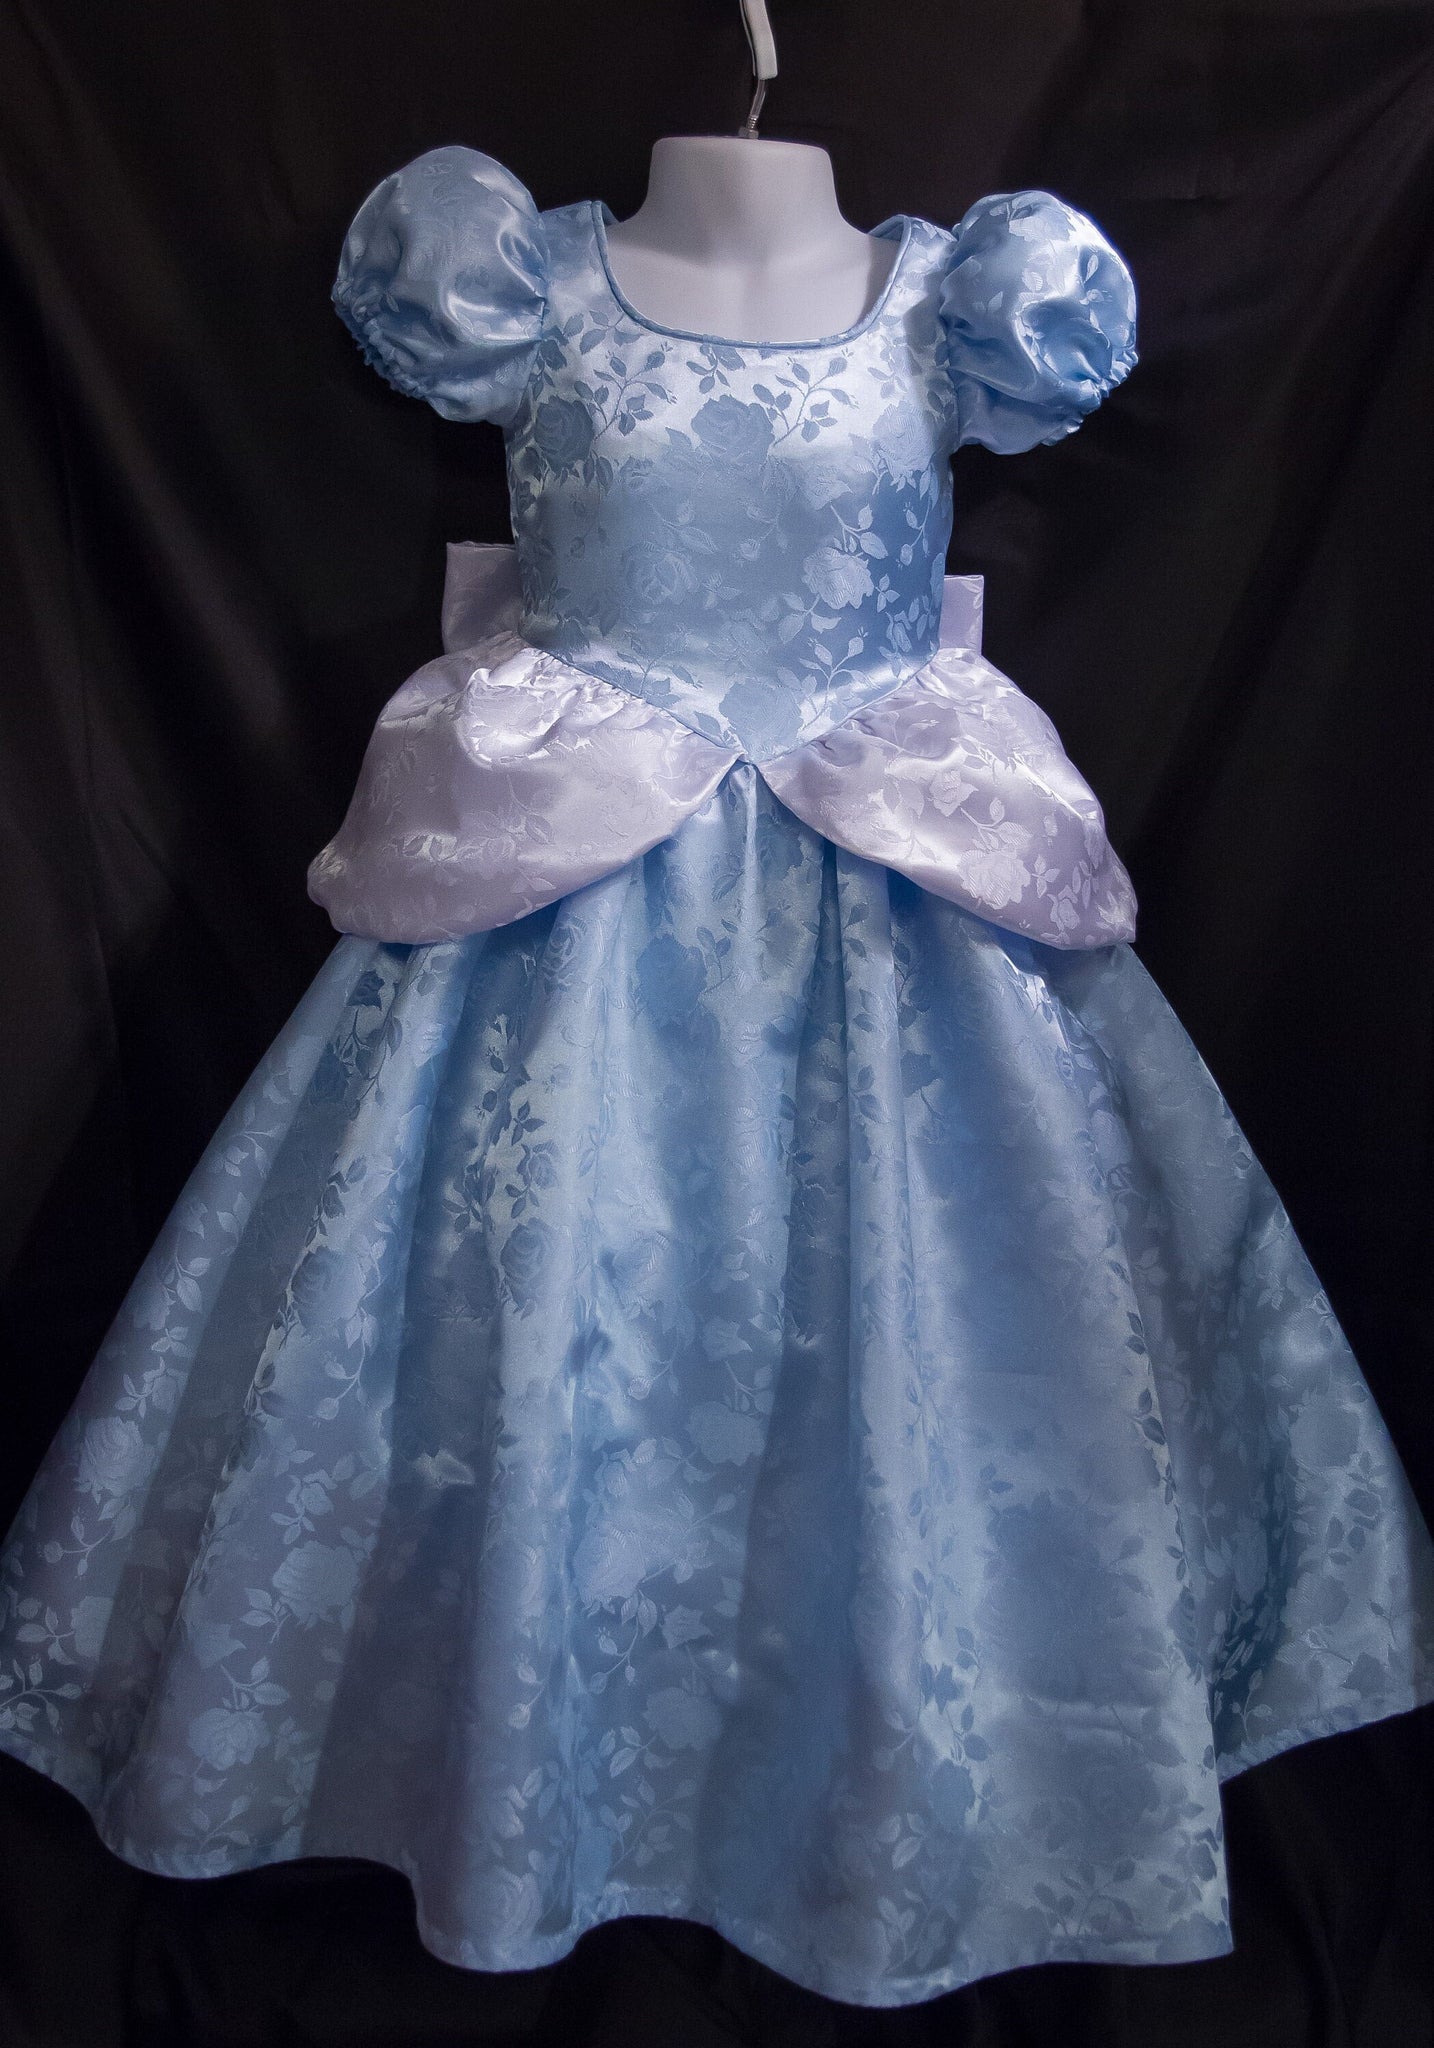 Cinderella GOWN Costume Blue/White FLORAL Satin Brocade CHILD Size